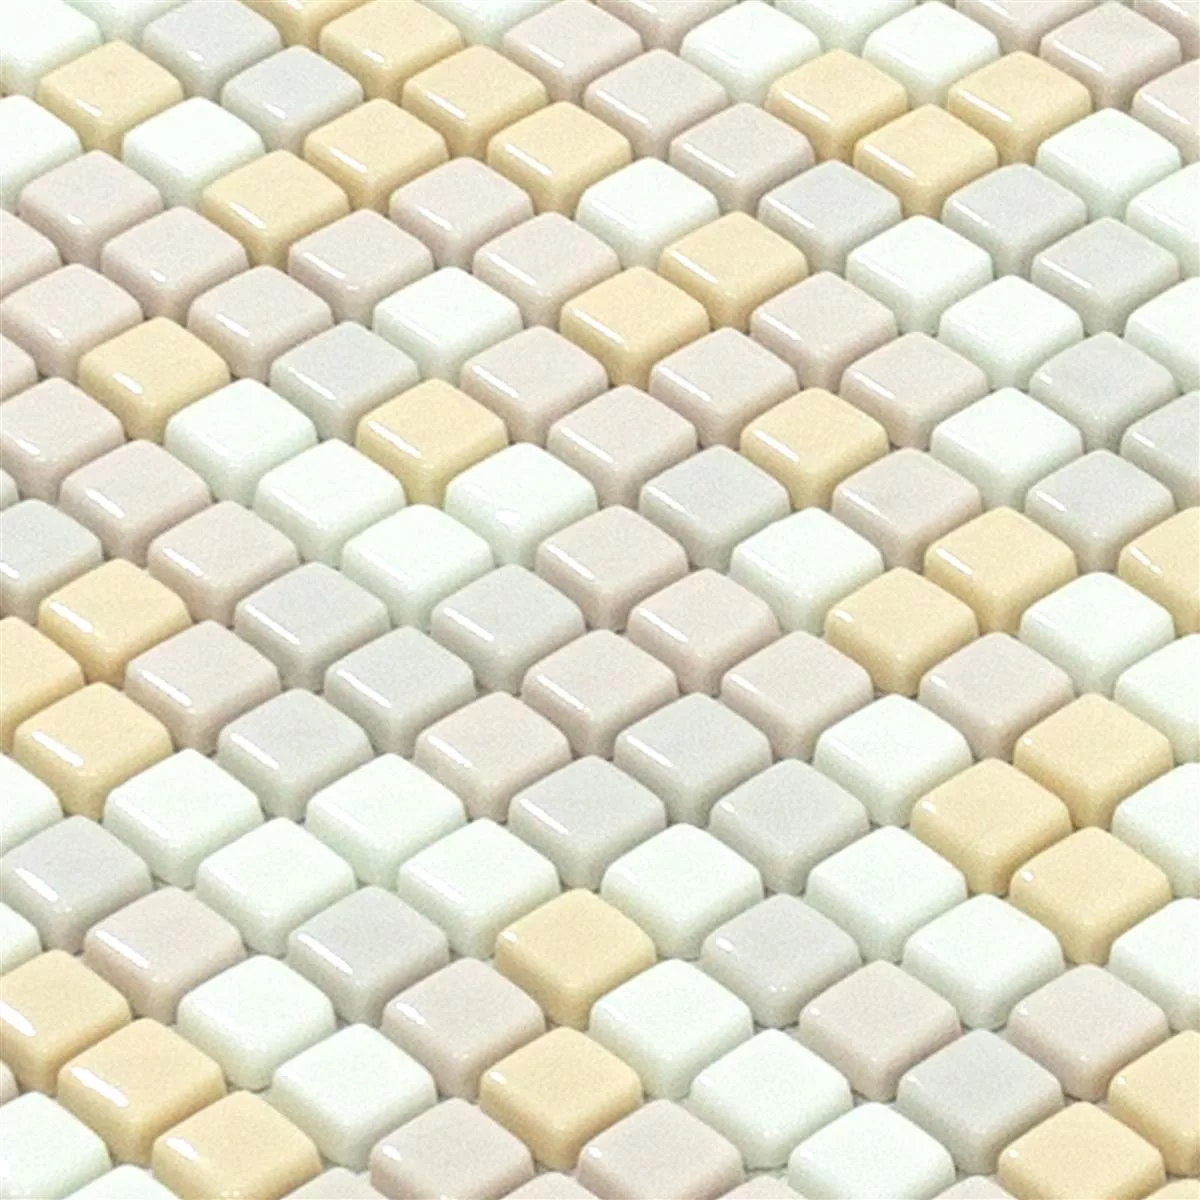 Sample Glass Mosaic Tiles Delight Creme Mix